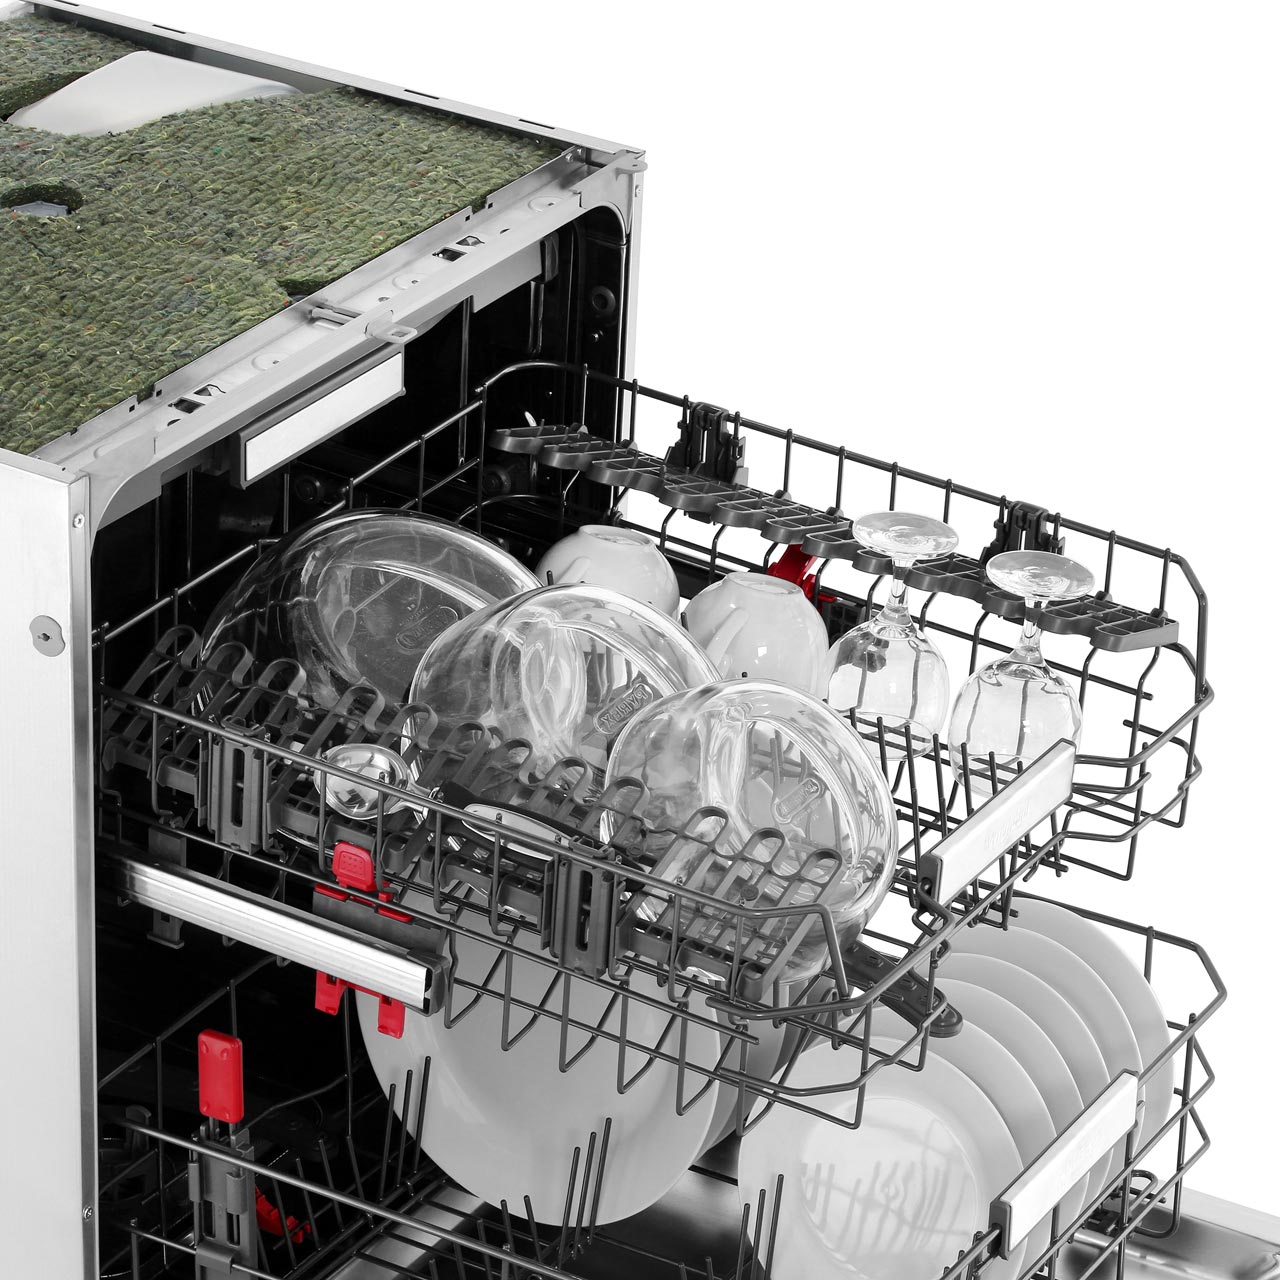 whirlpool integrated dishwasher